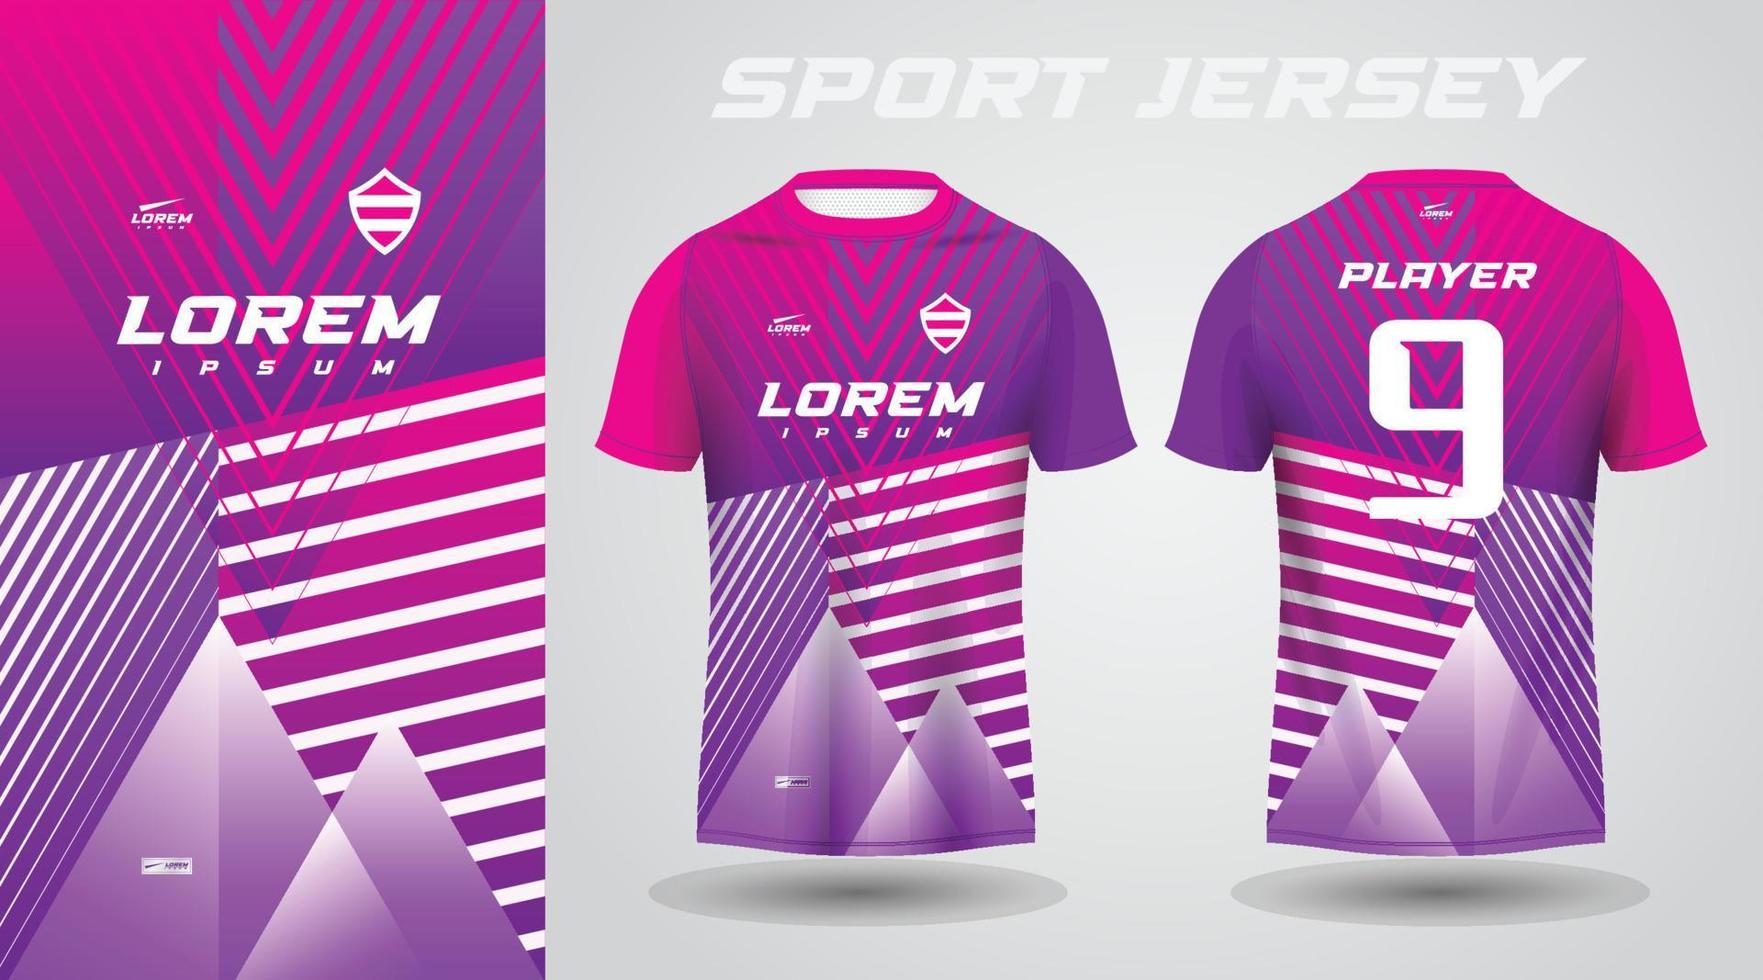 Purper roze sport Jersey ontwerp vector